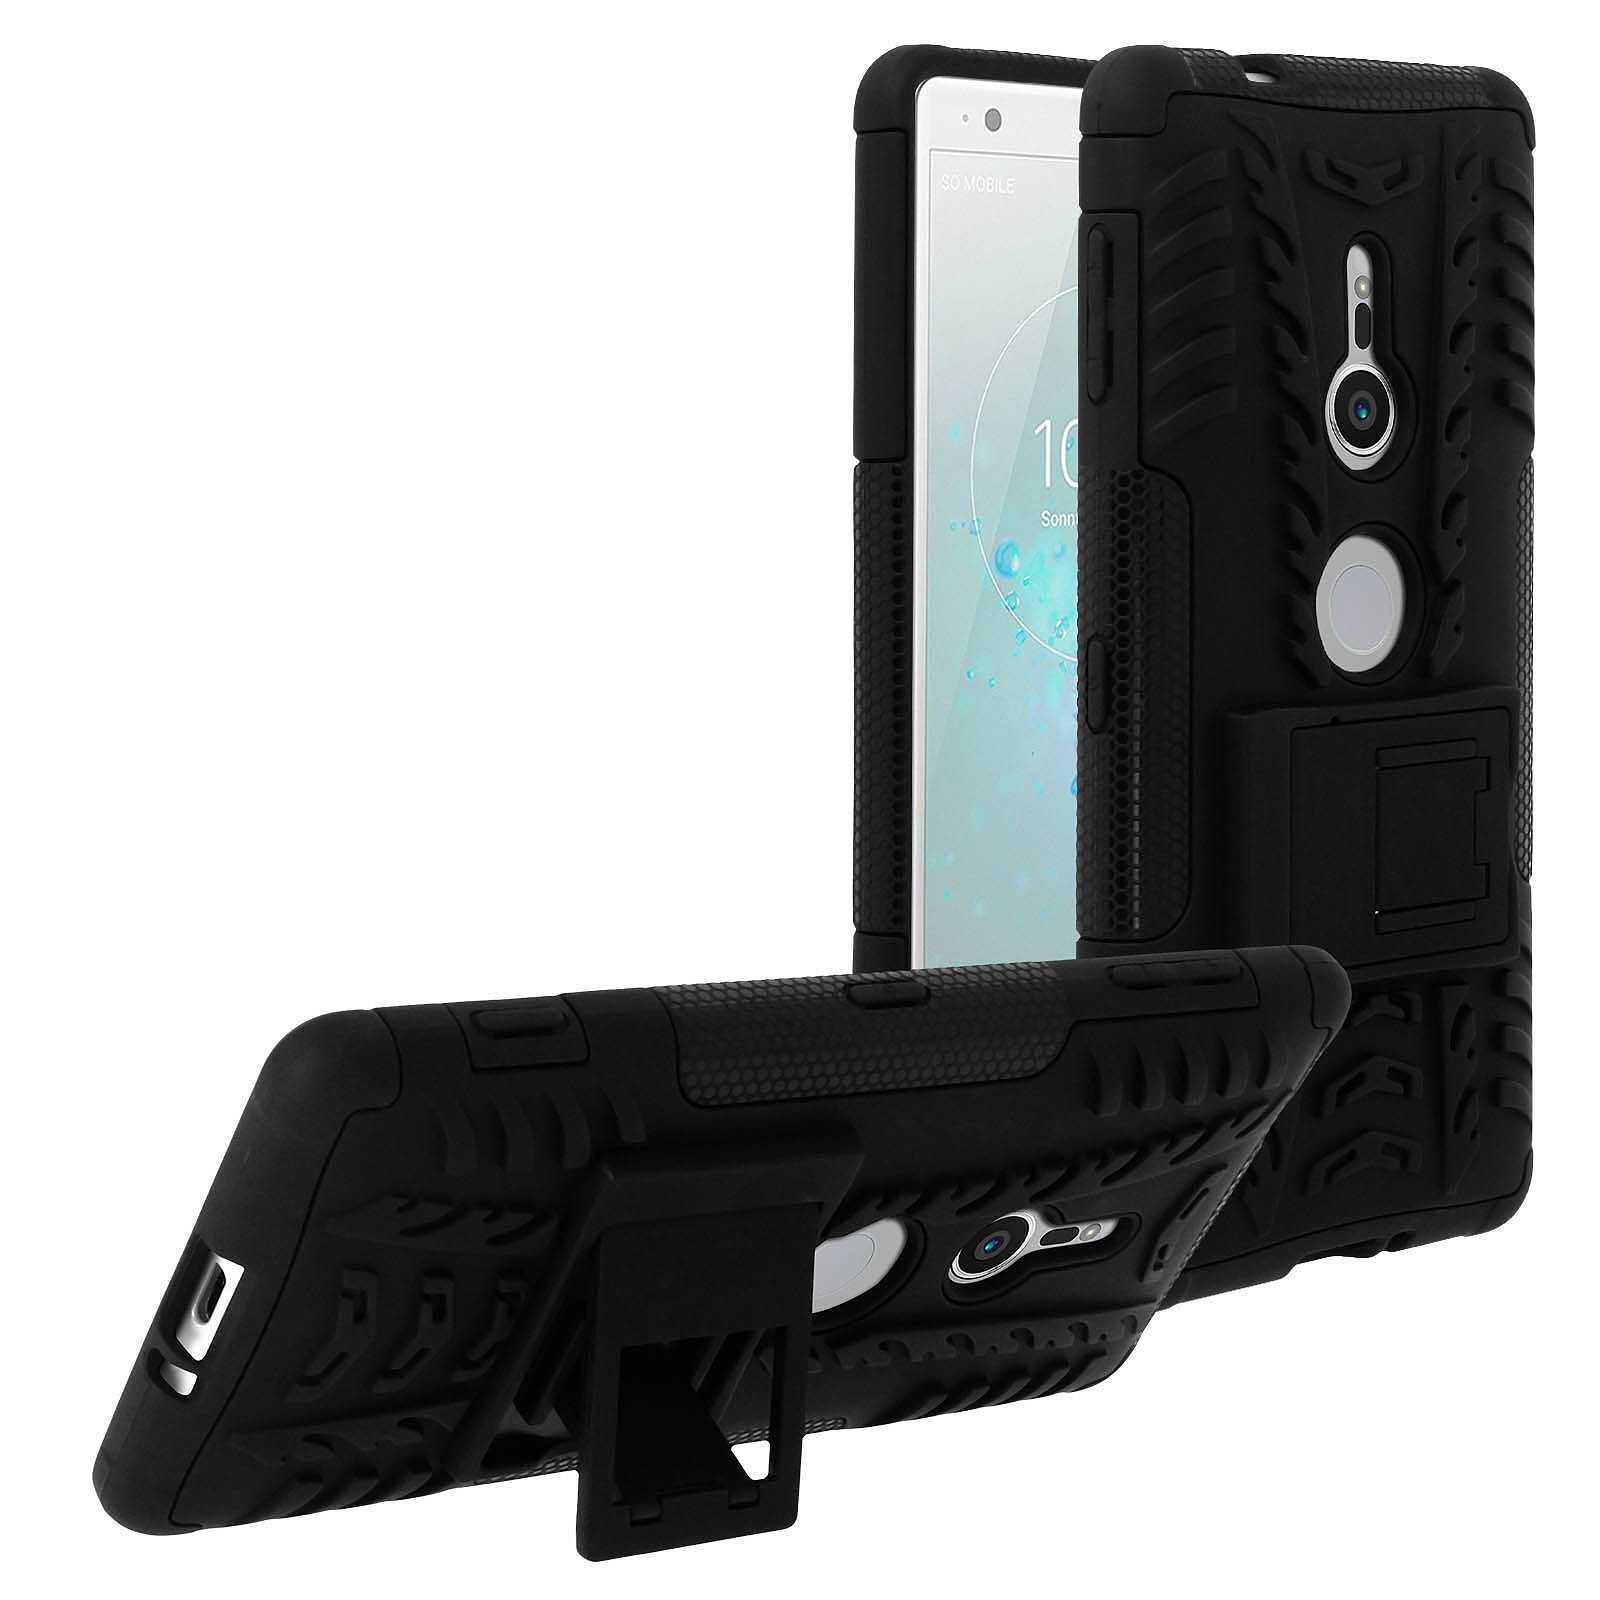 Avizar Coque Sony Xperia XZ2 Protection Antichocs + Support Integre - Noir - Coque telephone Avizar